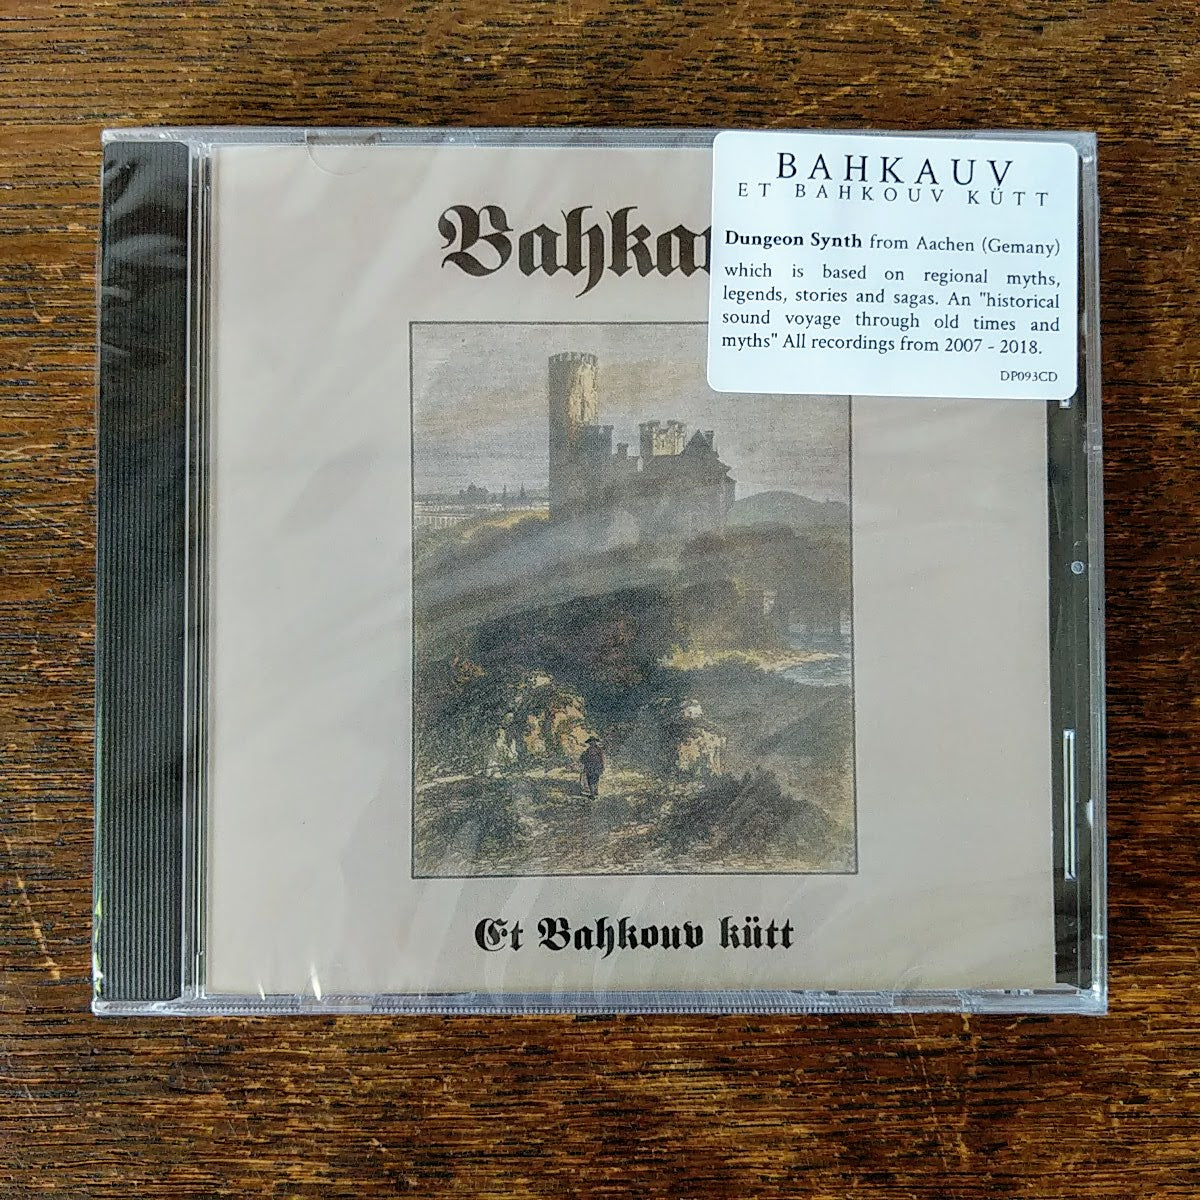 [SOLD OUT] BAHKAUV "Et Bahkouv kütt" CD